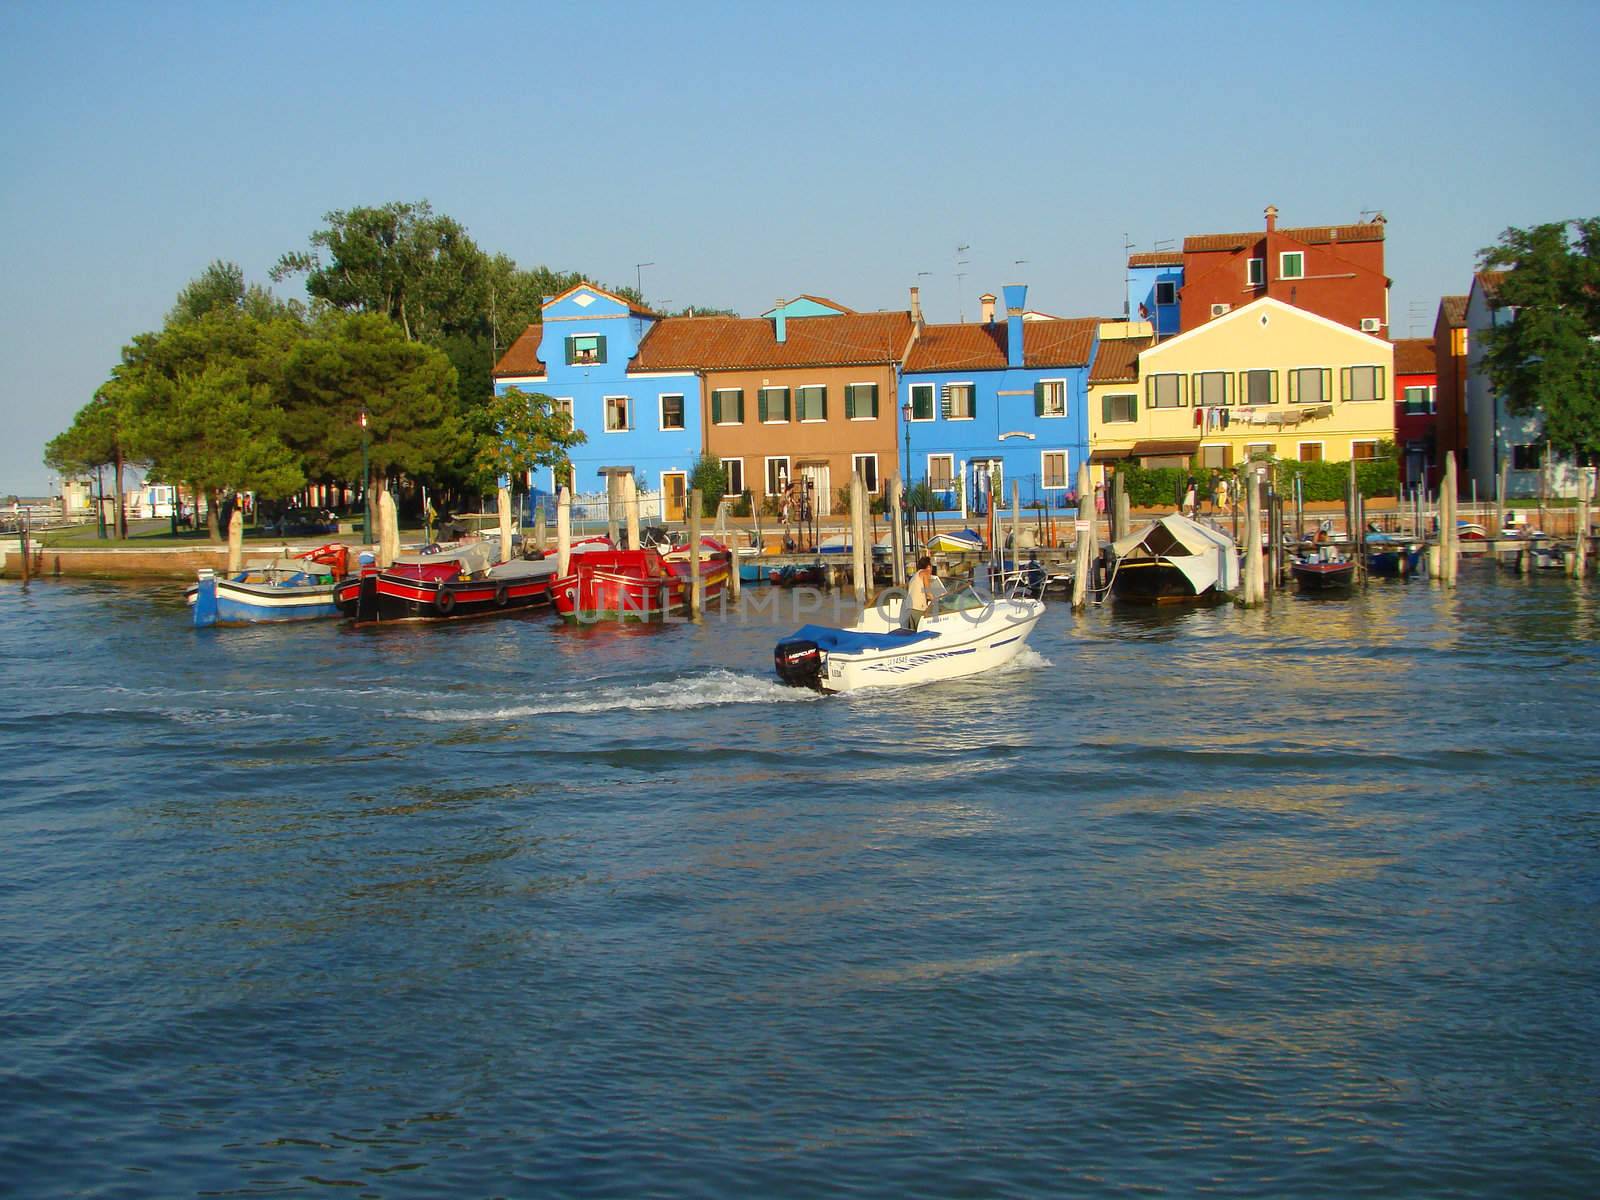   Mazzorbo-  small venetian island, conected with bridge with Burano island. Venice, Italy.        